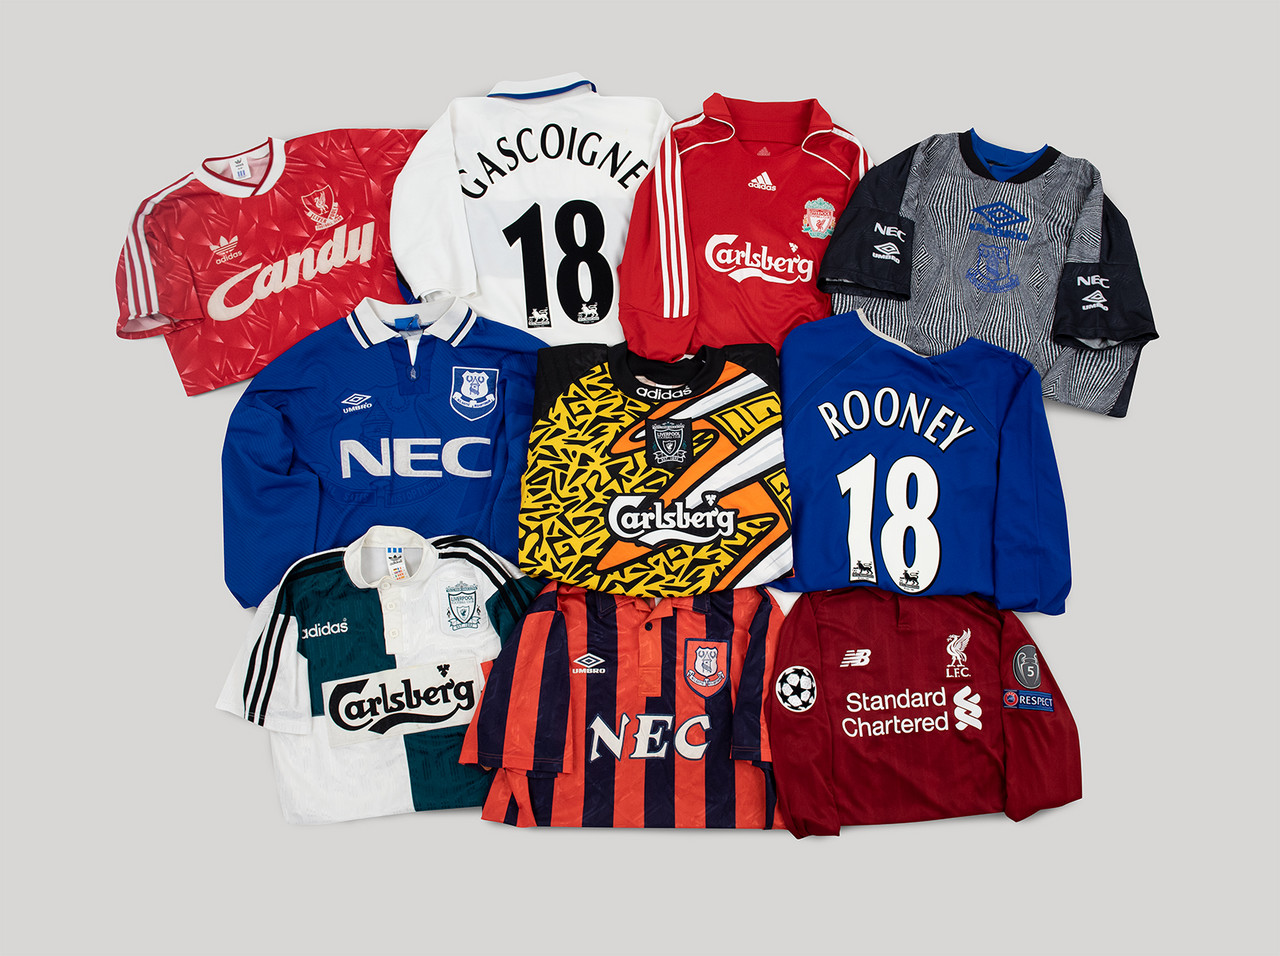 Classic Football Shirts returns to Liverpool